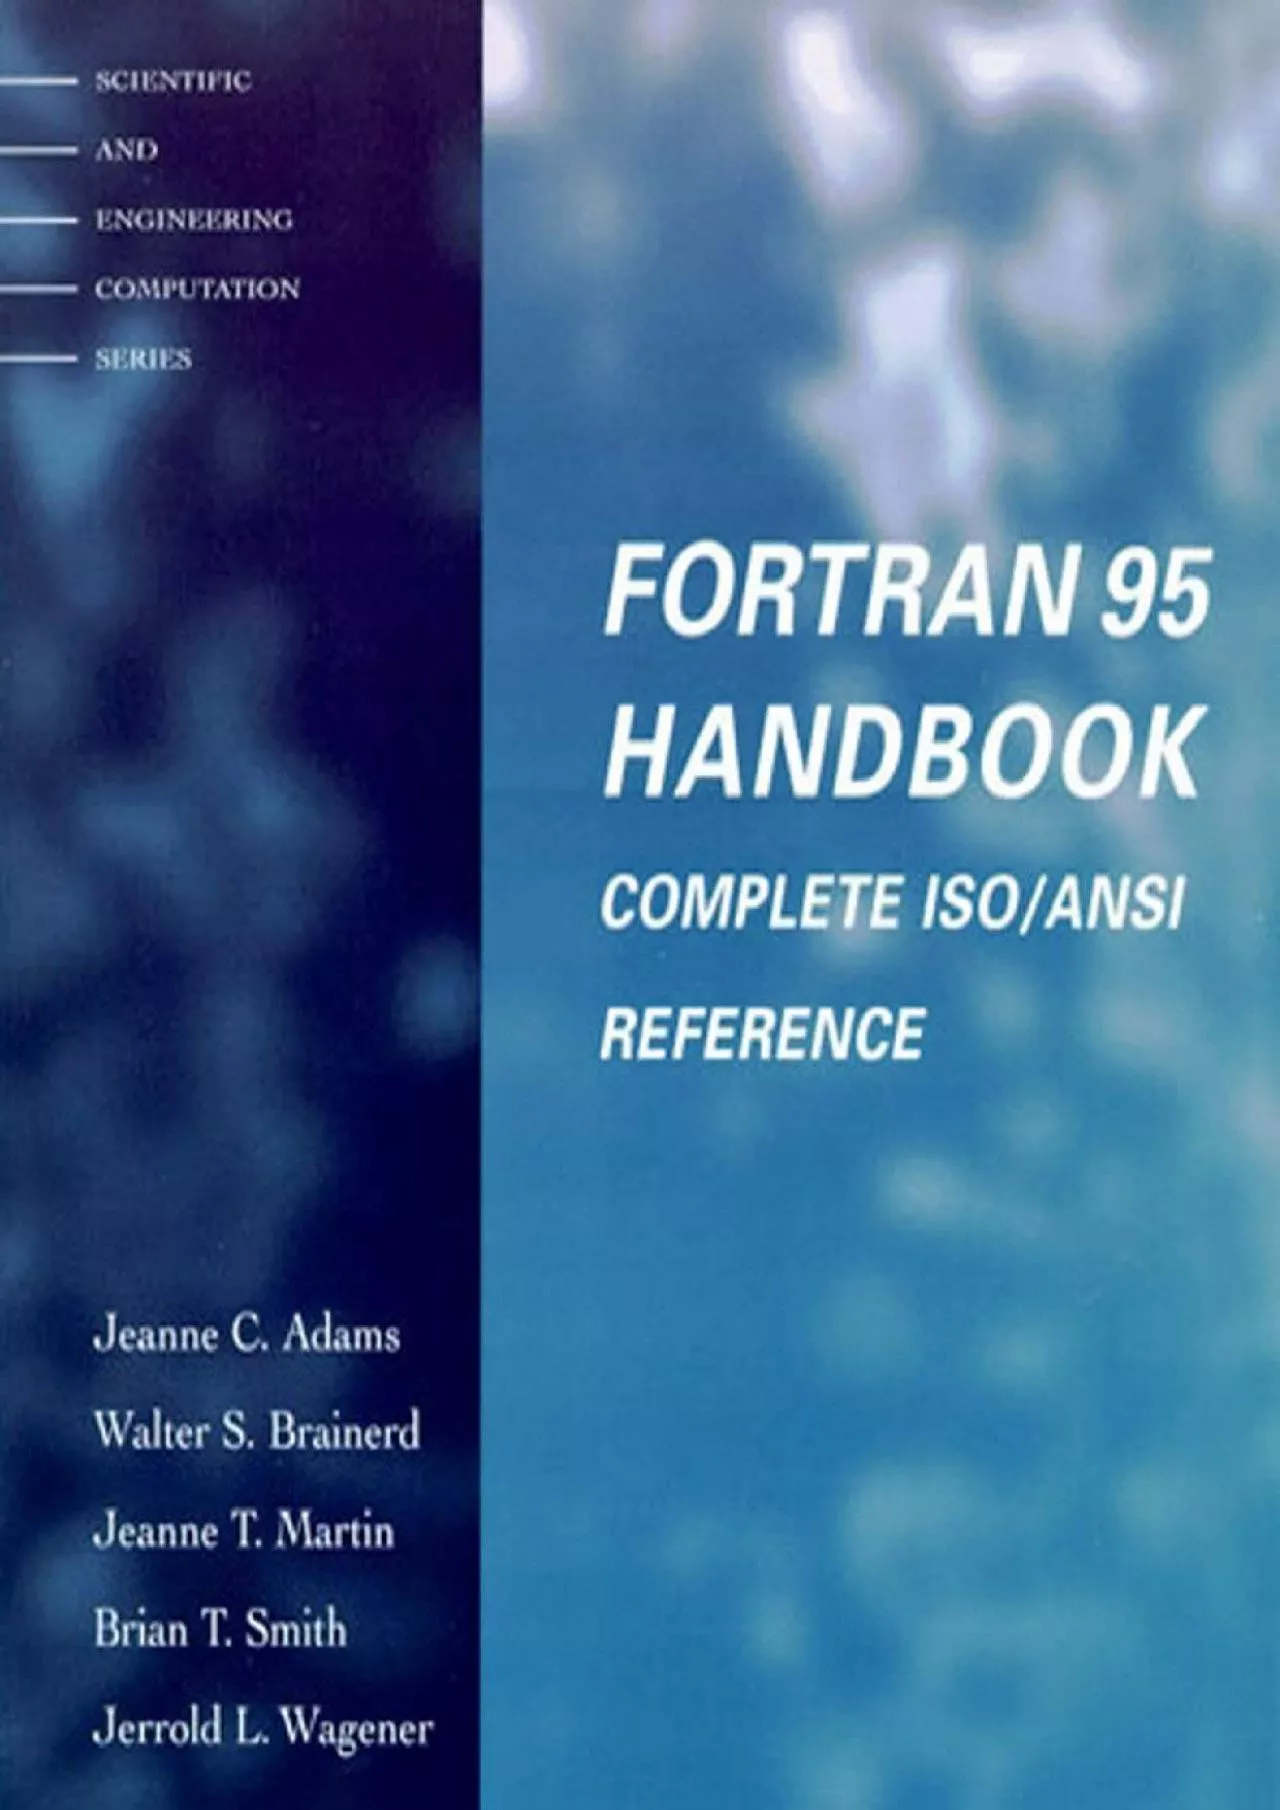 [READING BOOK]-Fortran 95 Handbook (Scientific and Engineering Computation)